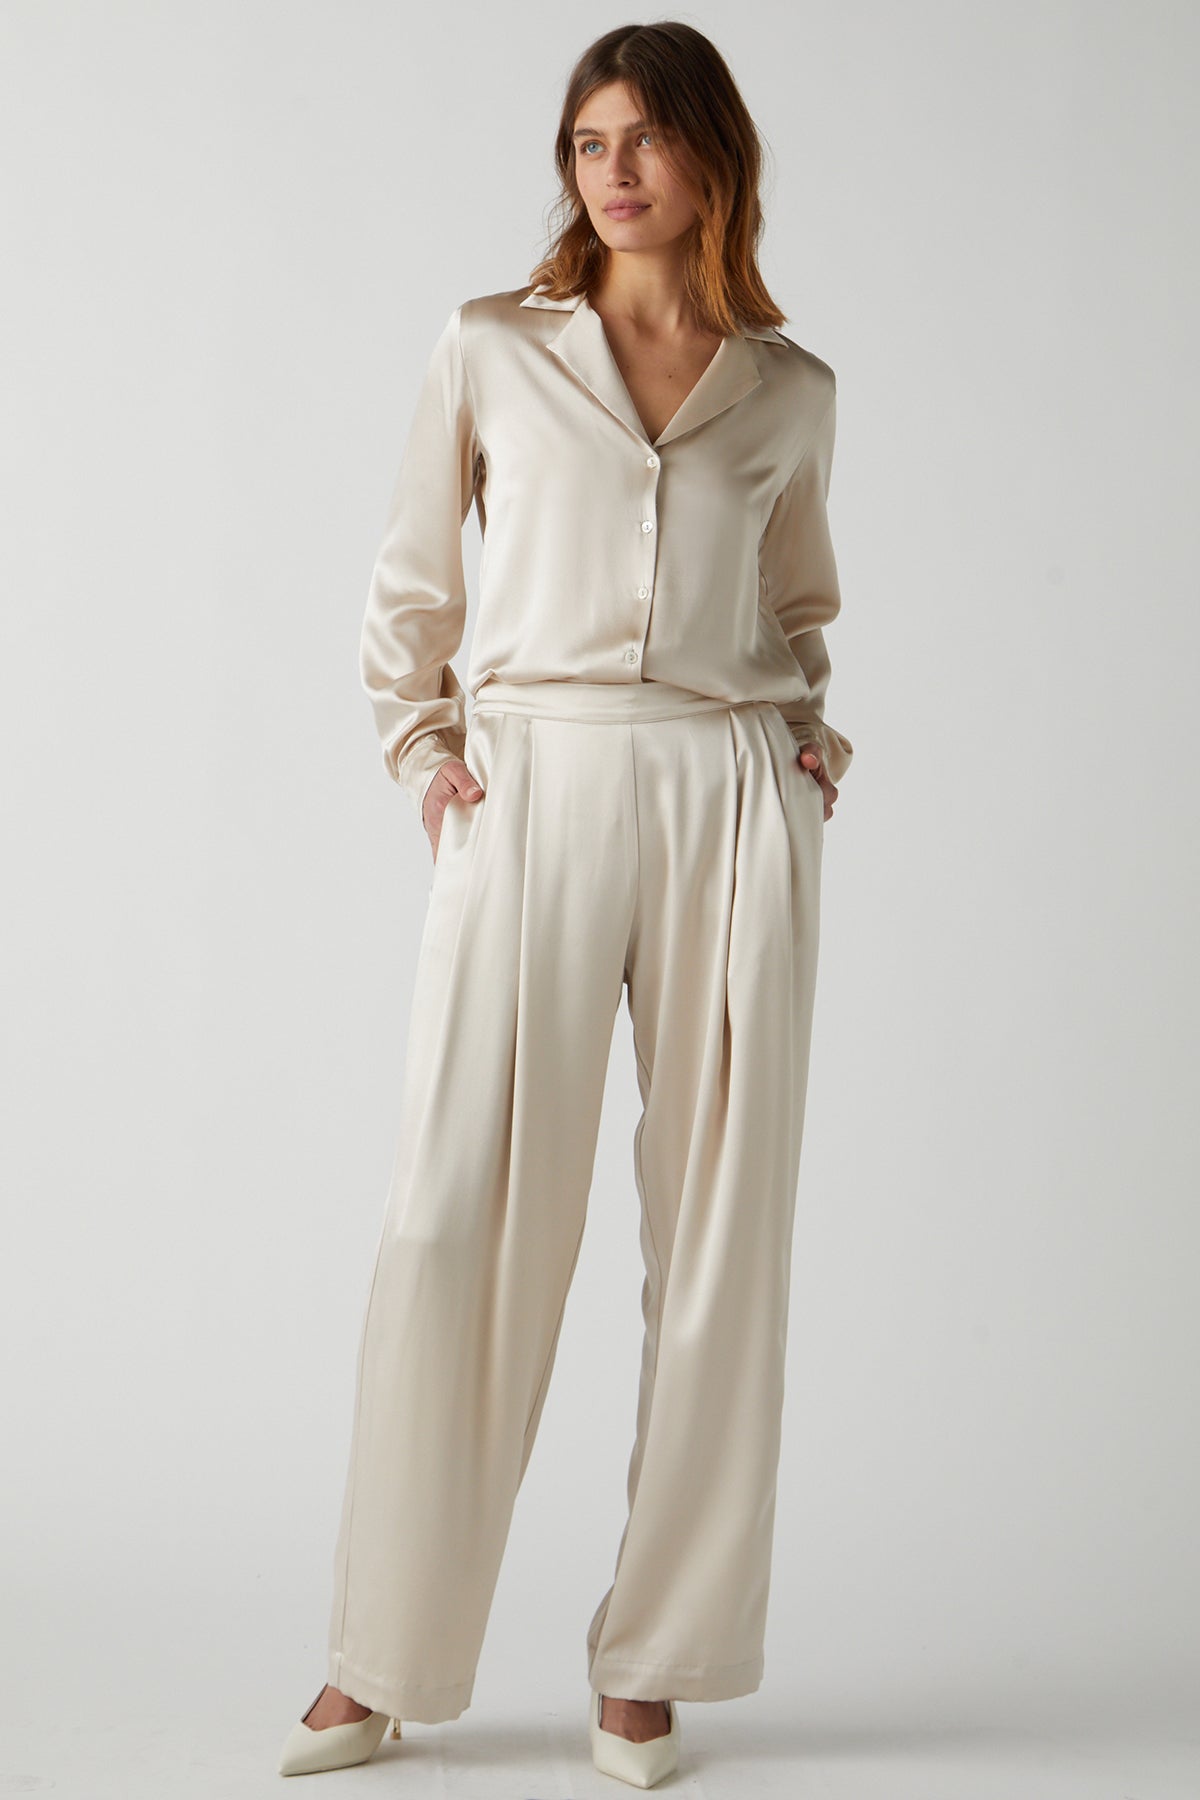 The model is wearing a Velvet by Jenny Graham Manhattan Pant.-25483418763457